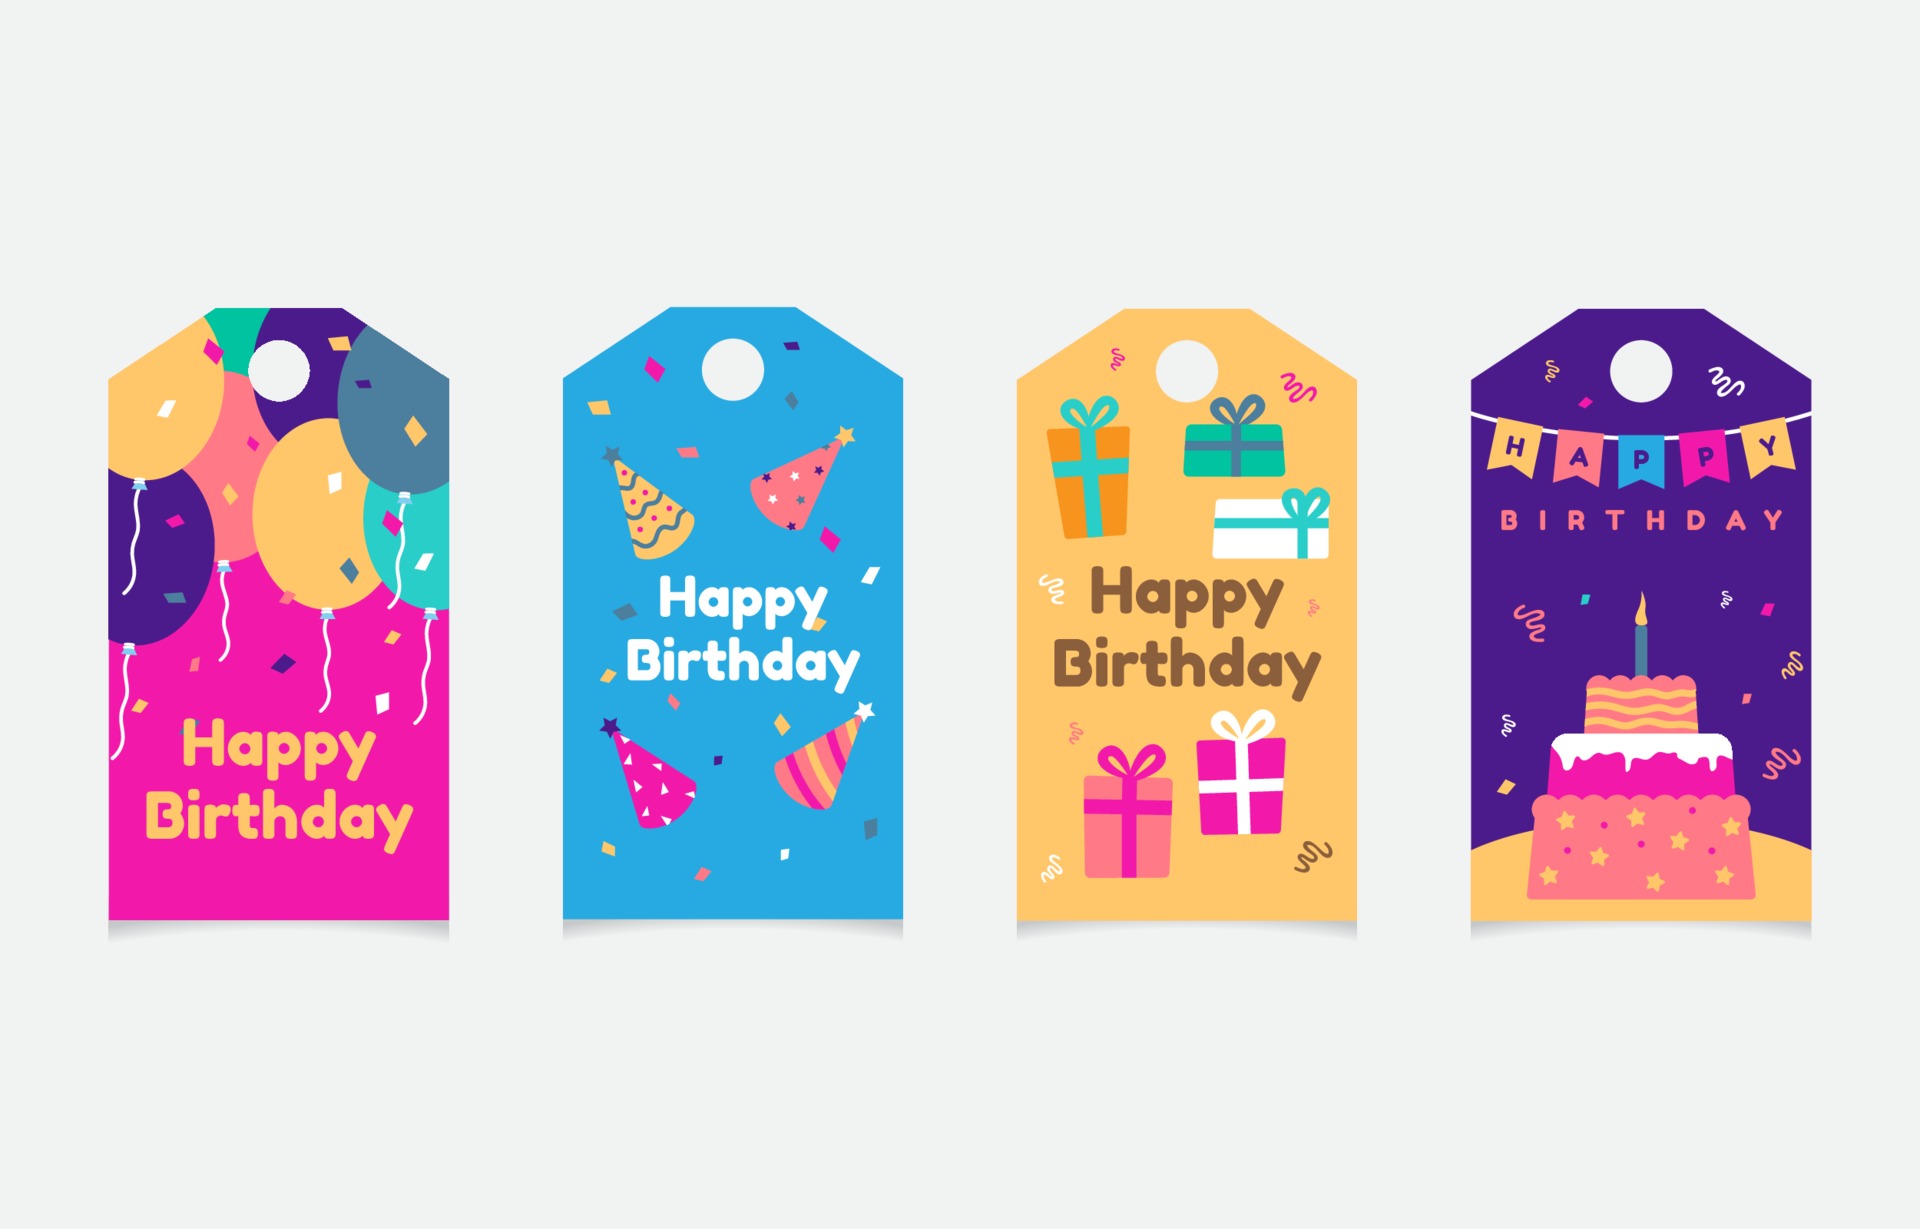 printable-teacher-birthday-gift-tags-happy-birthday-printable-teacher